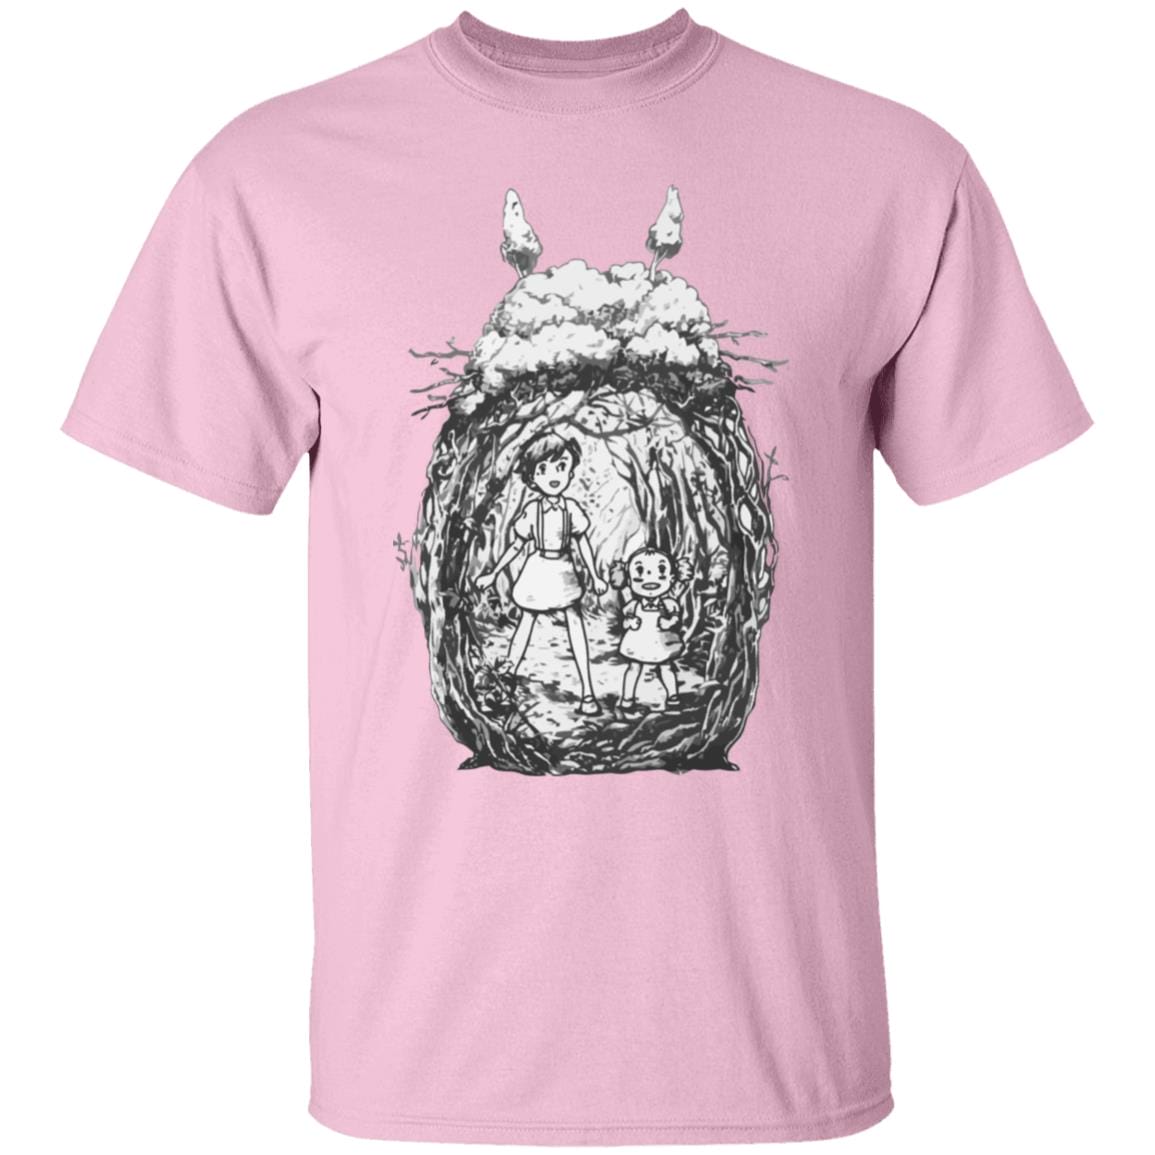 My Neighbor Totoro – Mei and Sastuki in the Forest T Shirt